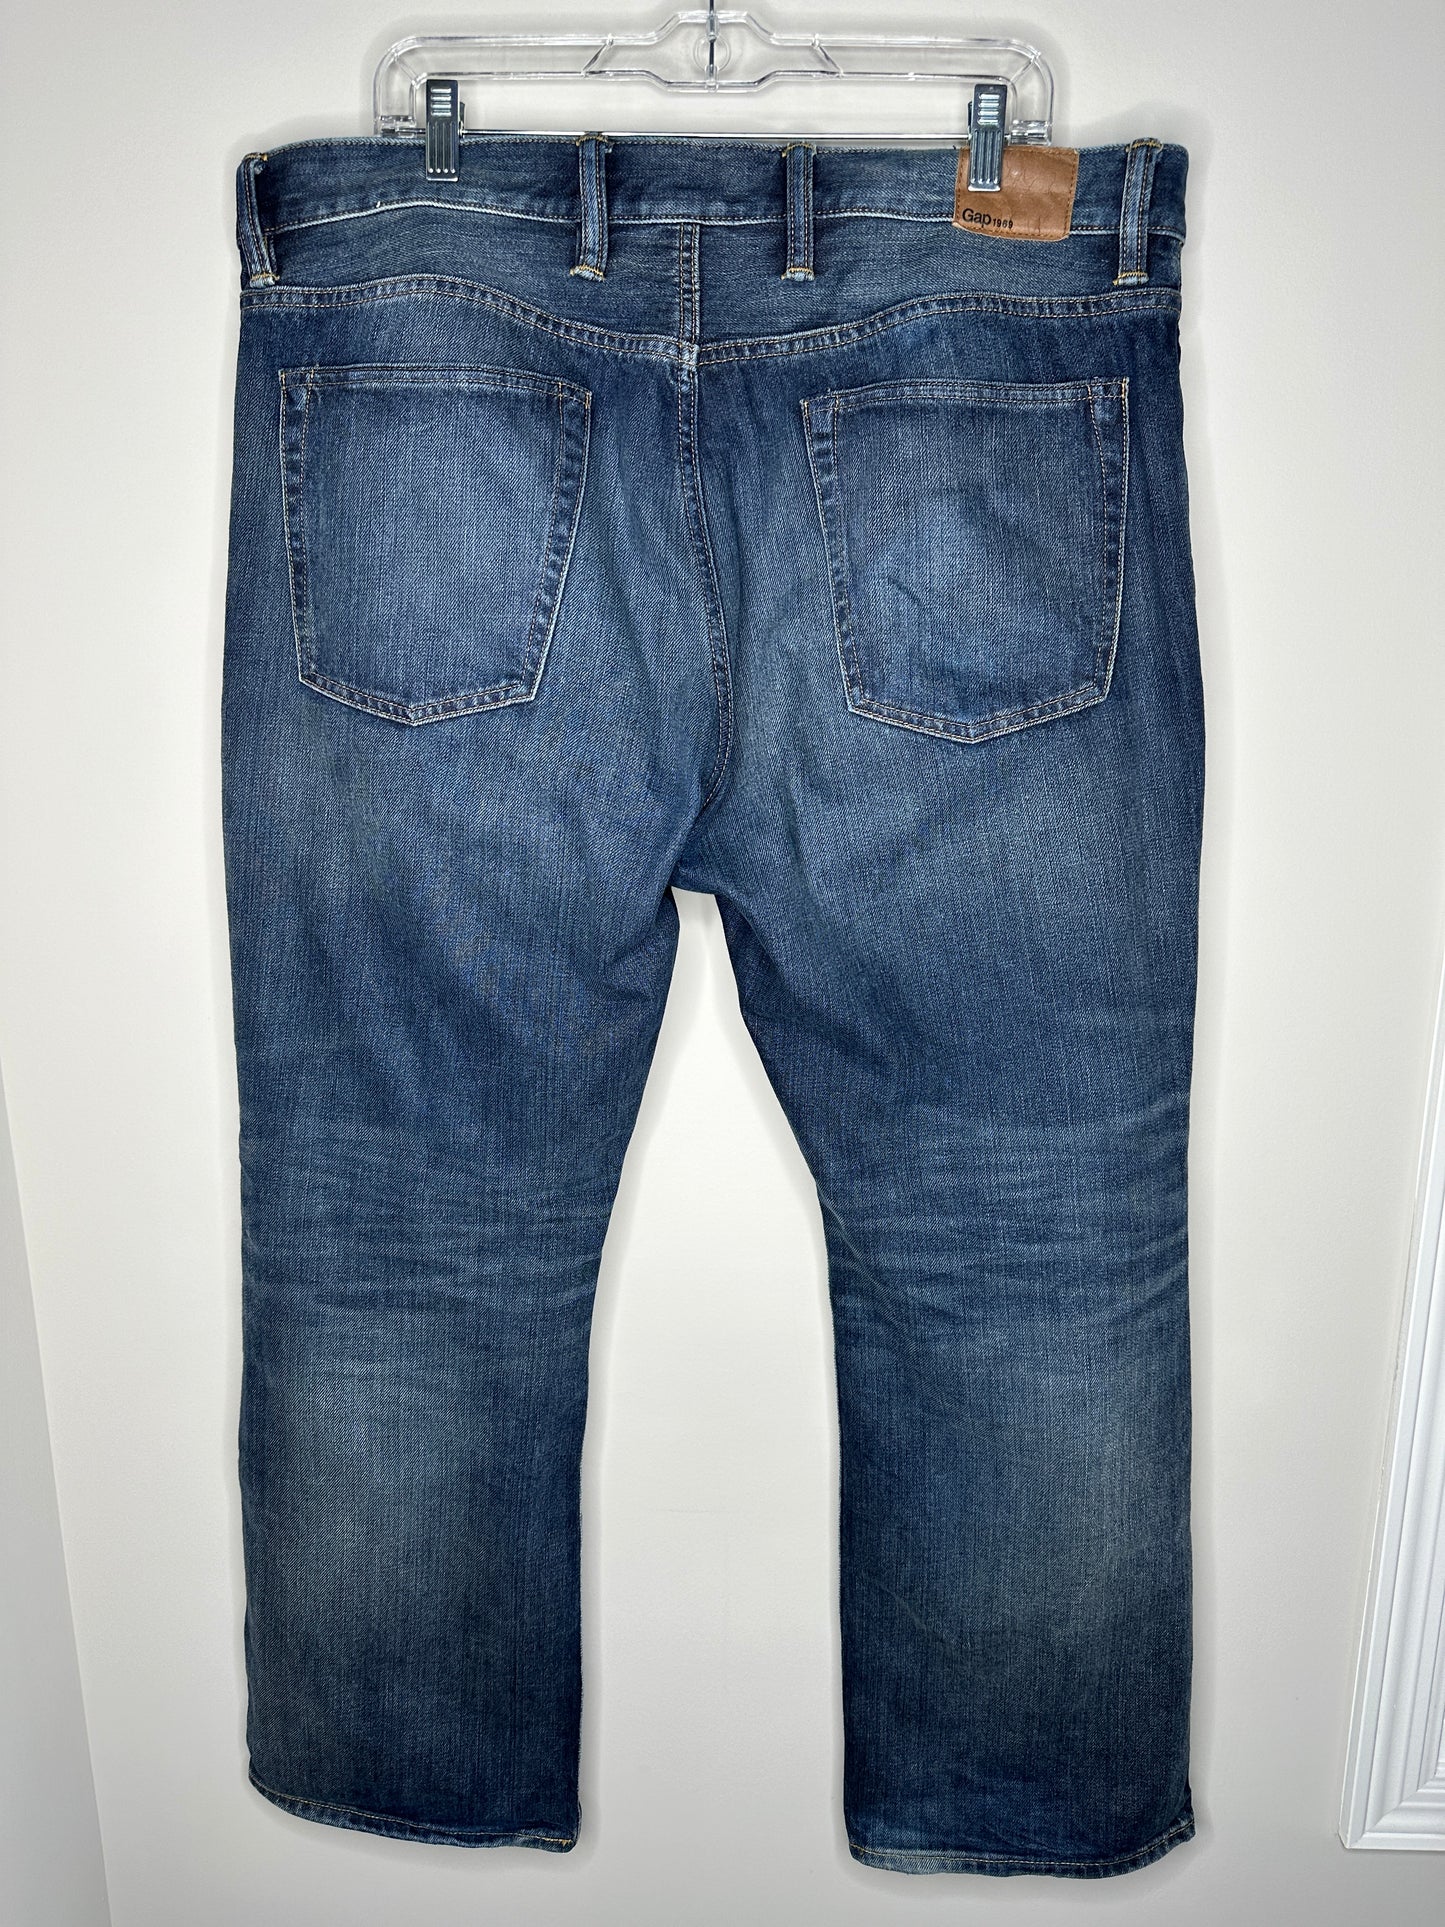 Gap 1969 Men's 38x30 (marked) Standard Blue Denim Jeans